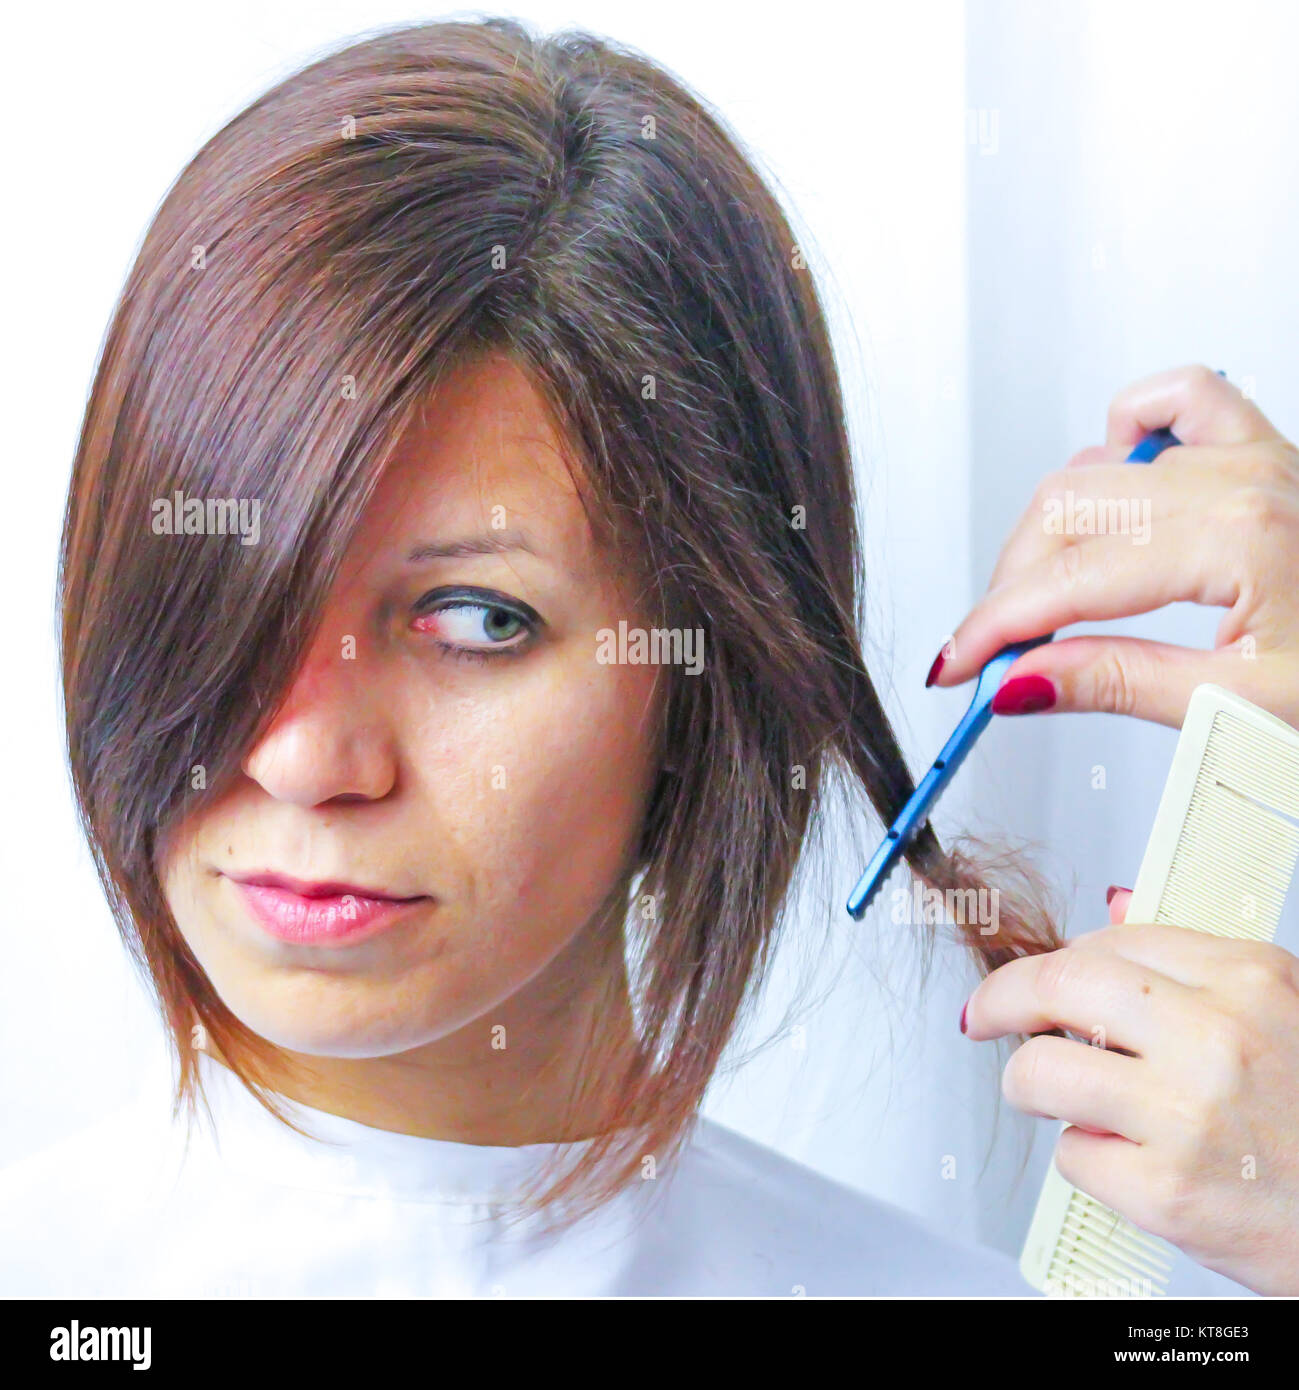 razor blade cutting hair